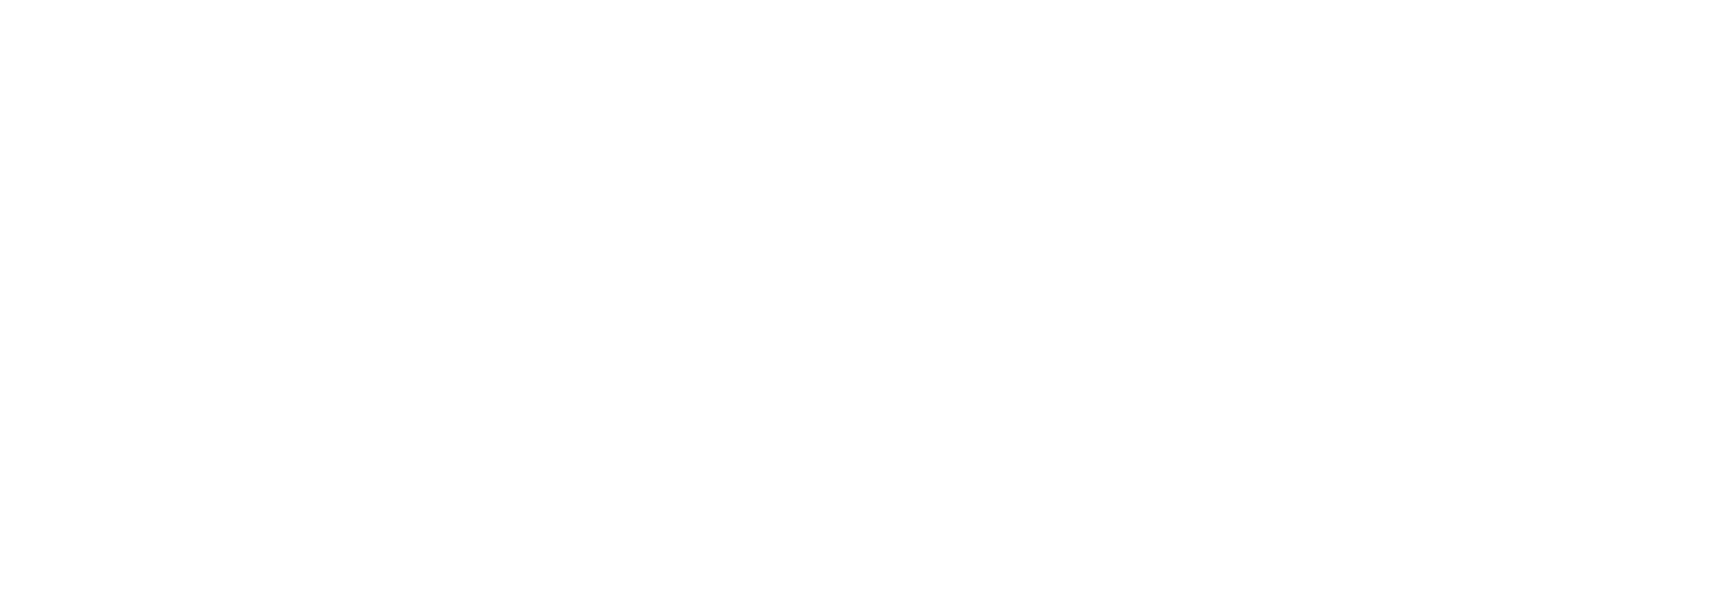 Positive Impact logo